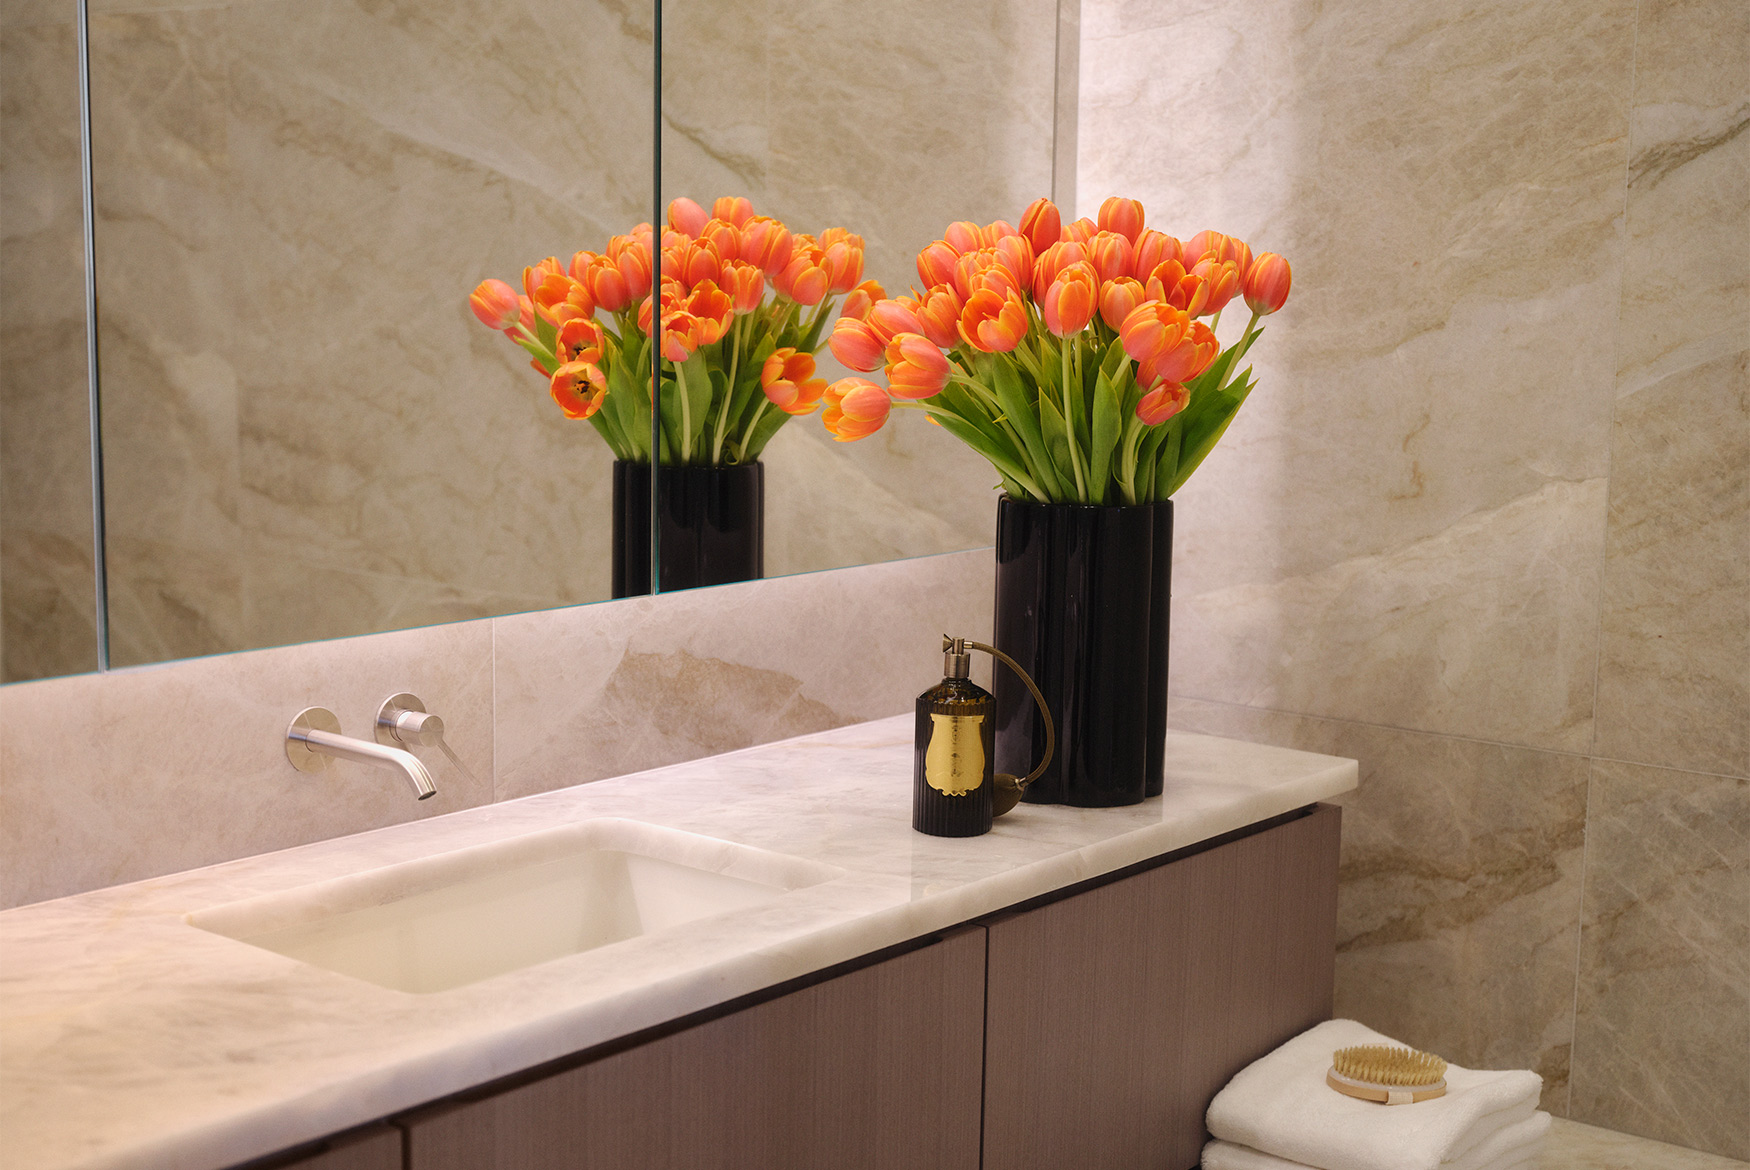 orange tulips by bathroom vanity in front of a mirror